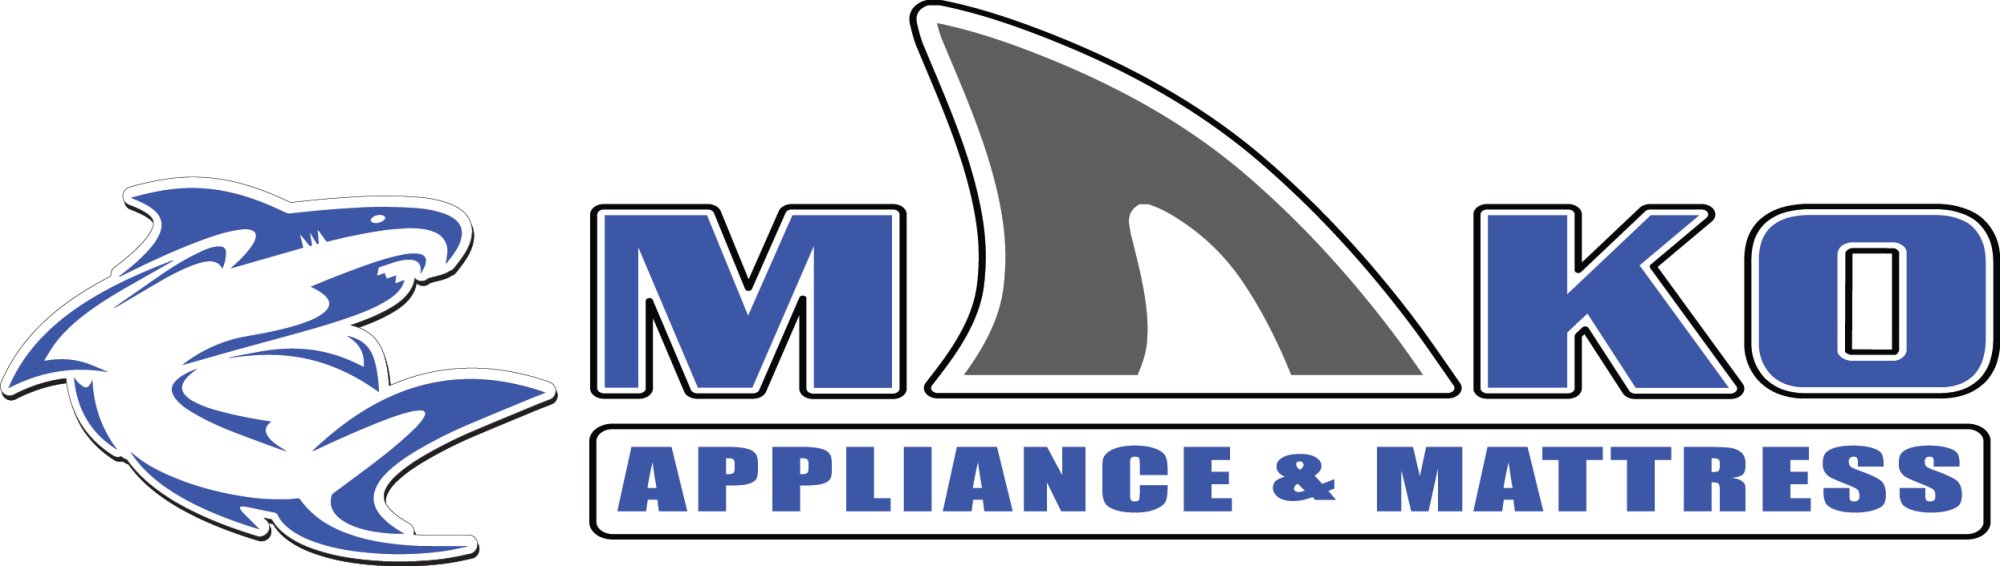 Household Appliance Logo - Household Appliances, Appliance Store, Appliance Center